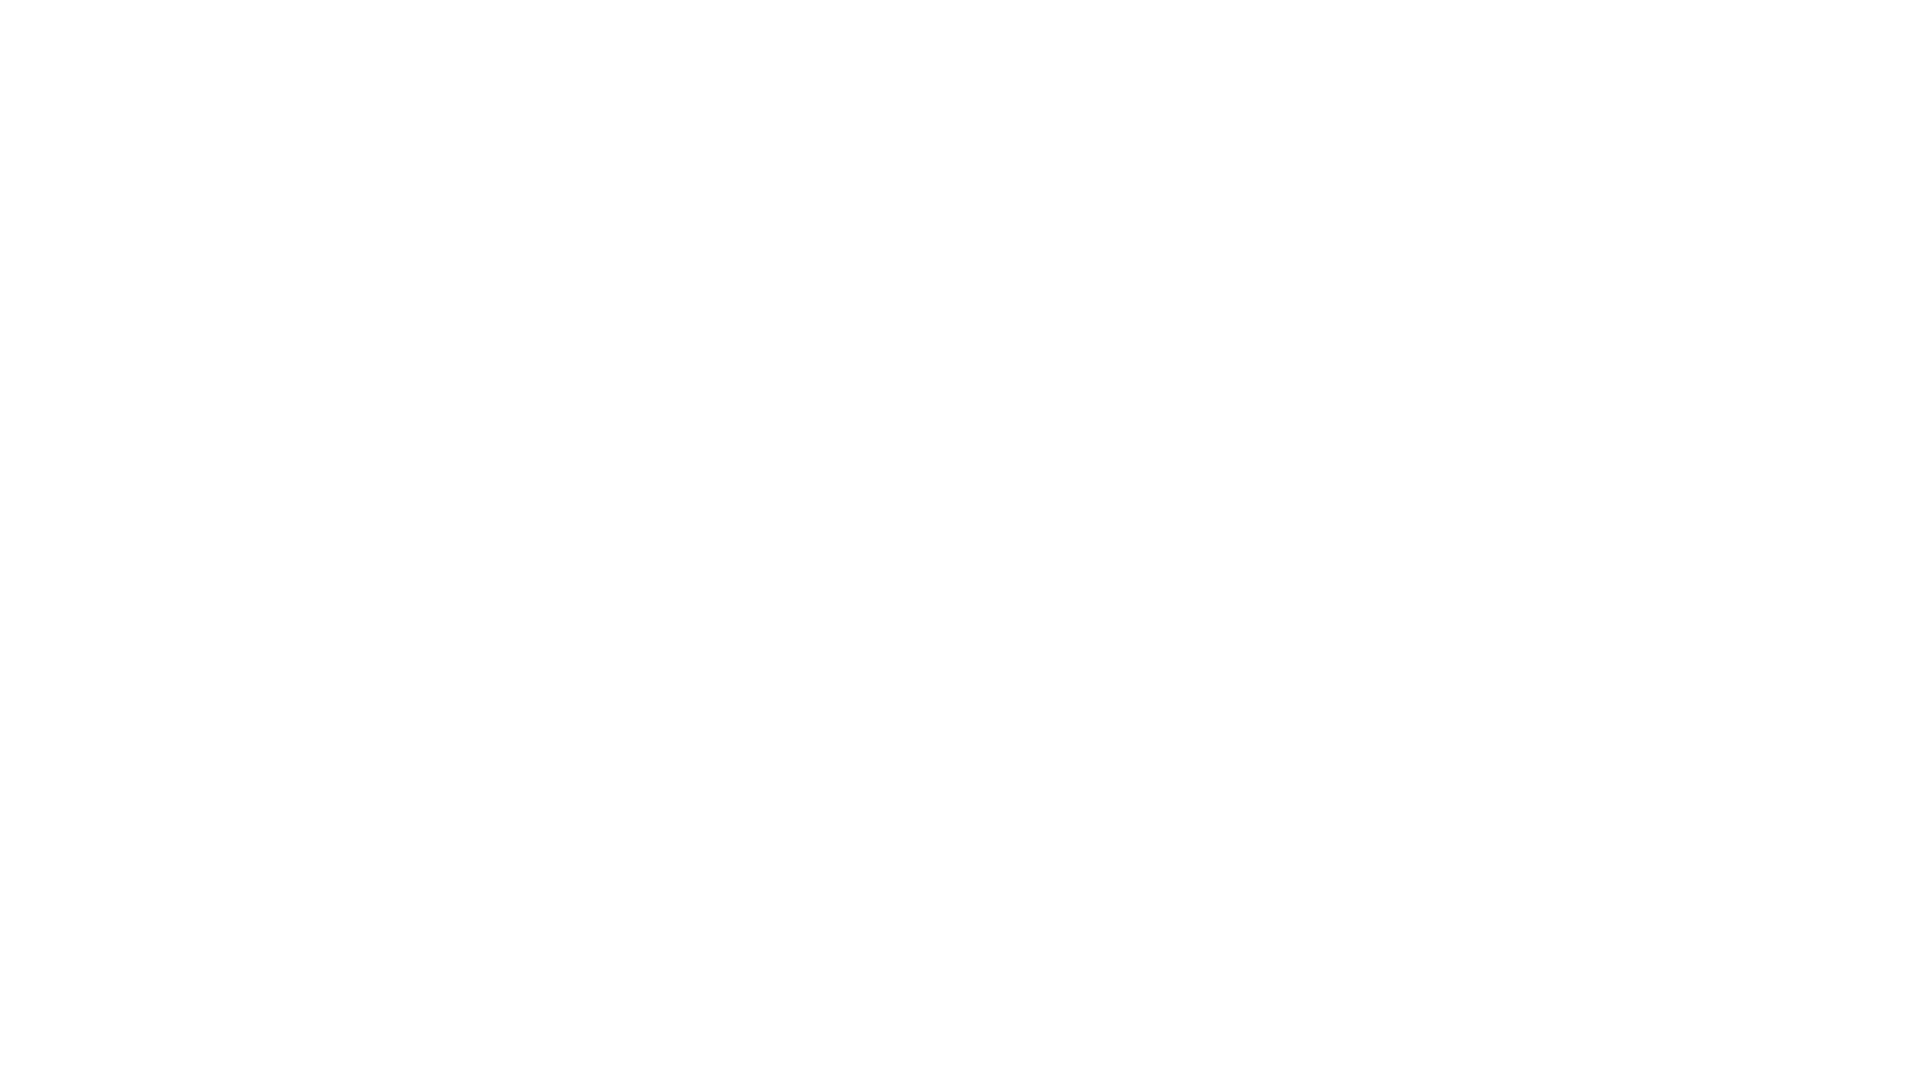 ucLeuvenLimburg